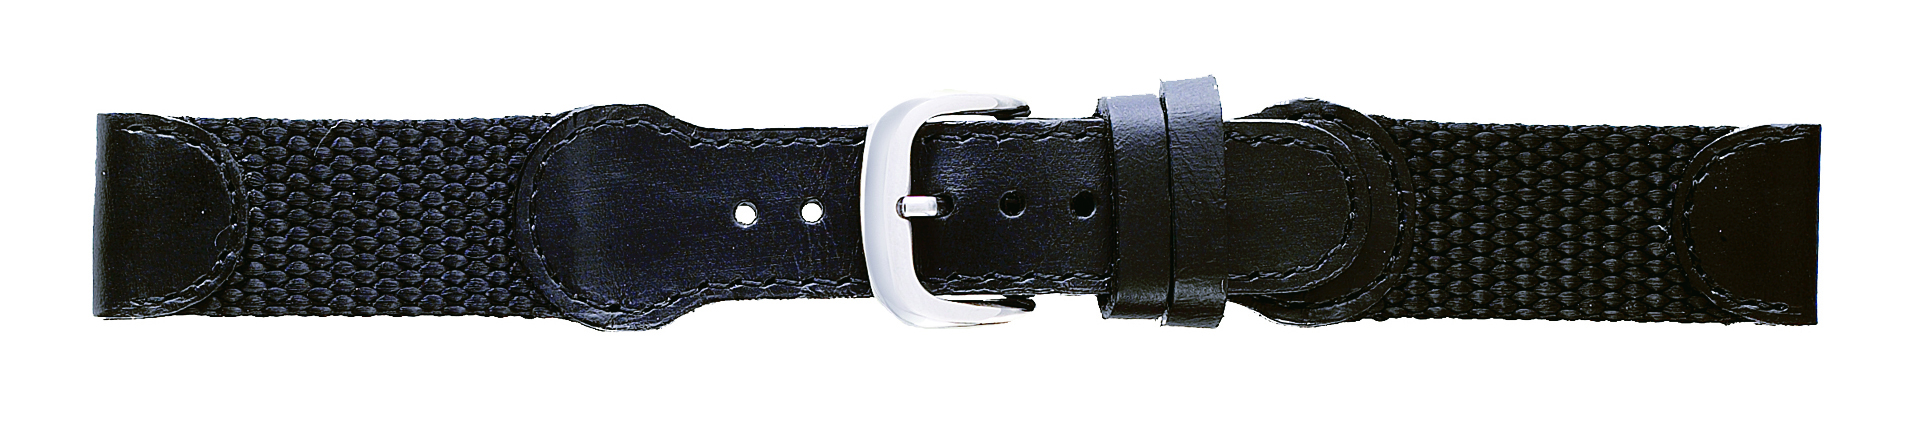 18mm Swiss Army Style Black Leather & Nylon Strap-0